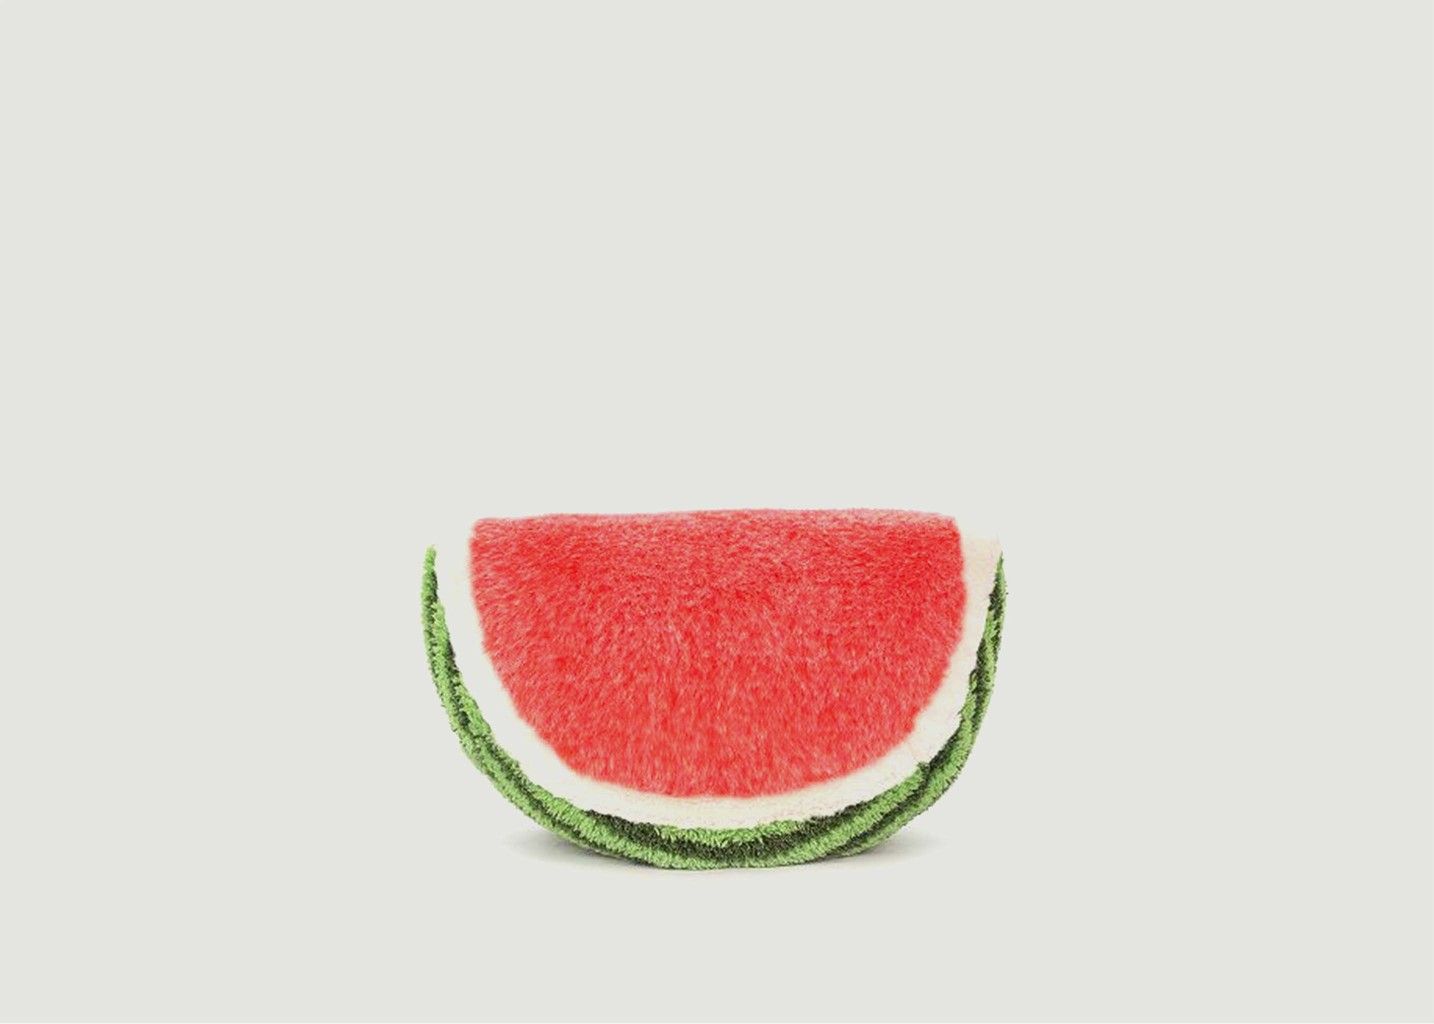 Amuseable Watermelon Plush - Jellycat